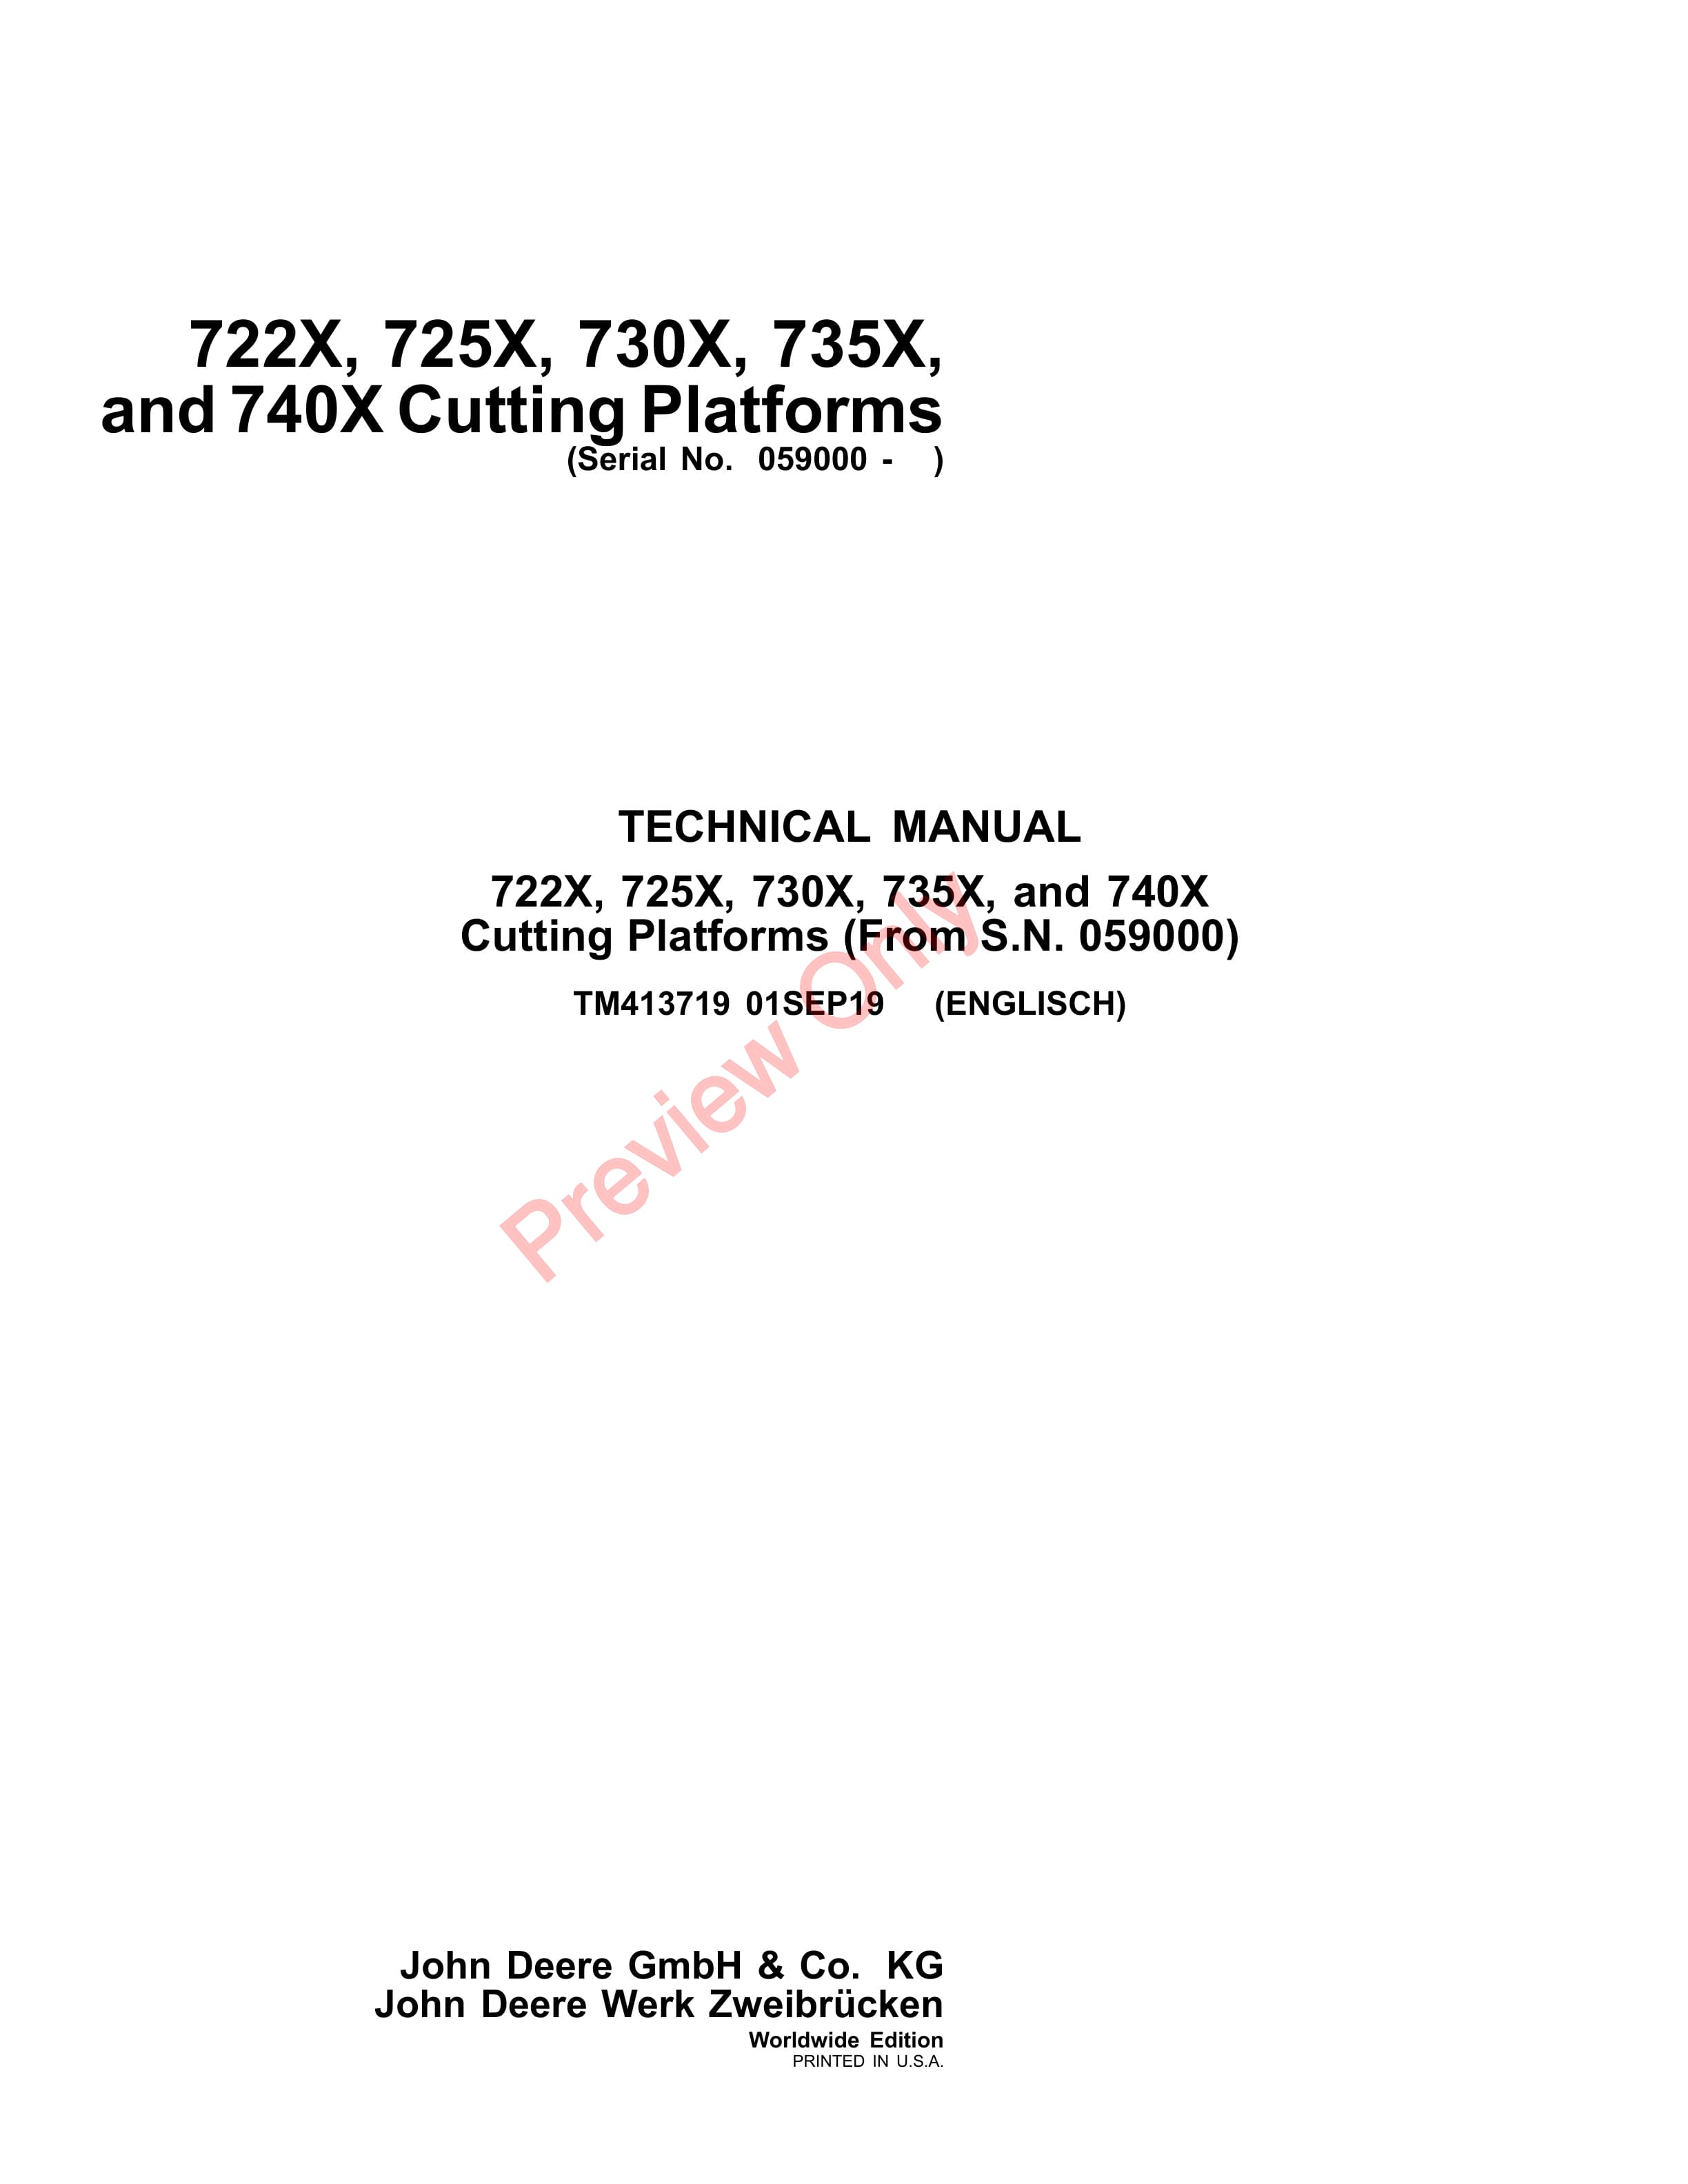 John Deere 722X 725X 730X 735X and 740X Cutting Platforms Technical Manual TM413719 01SEP19 1